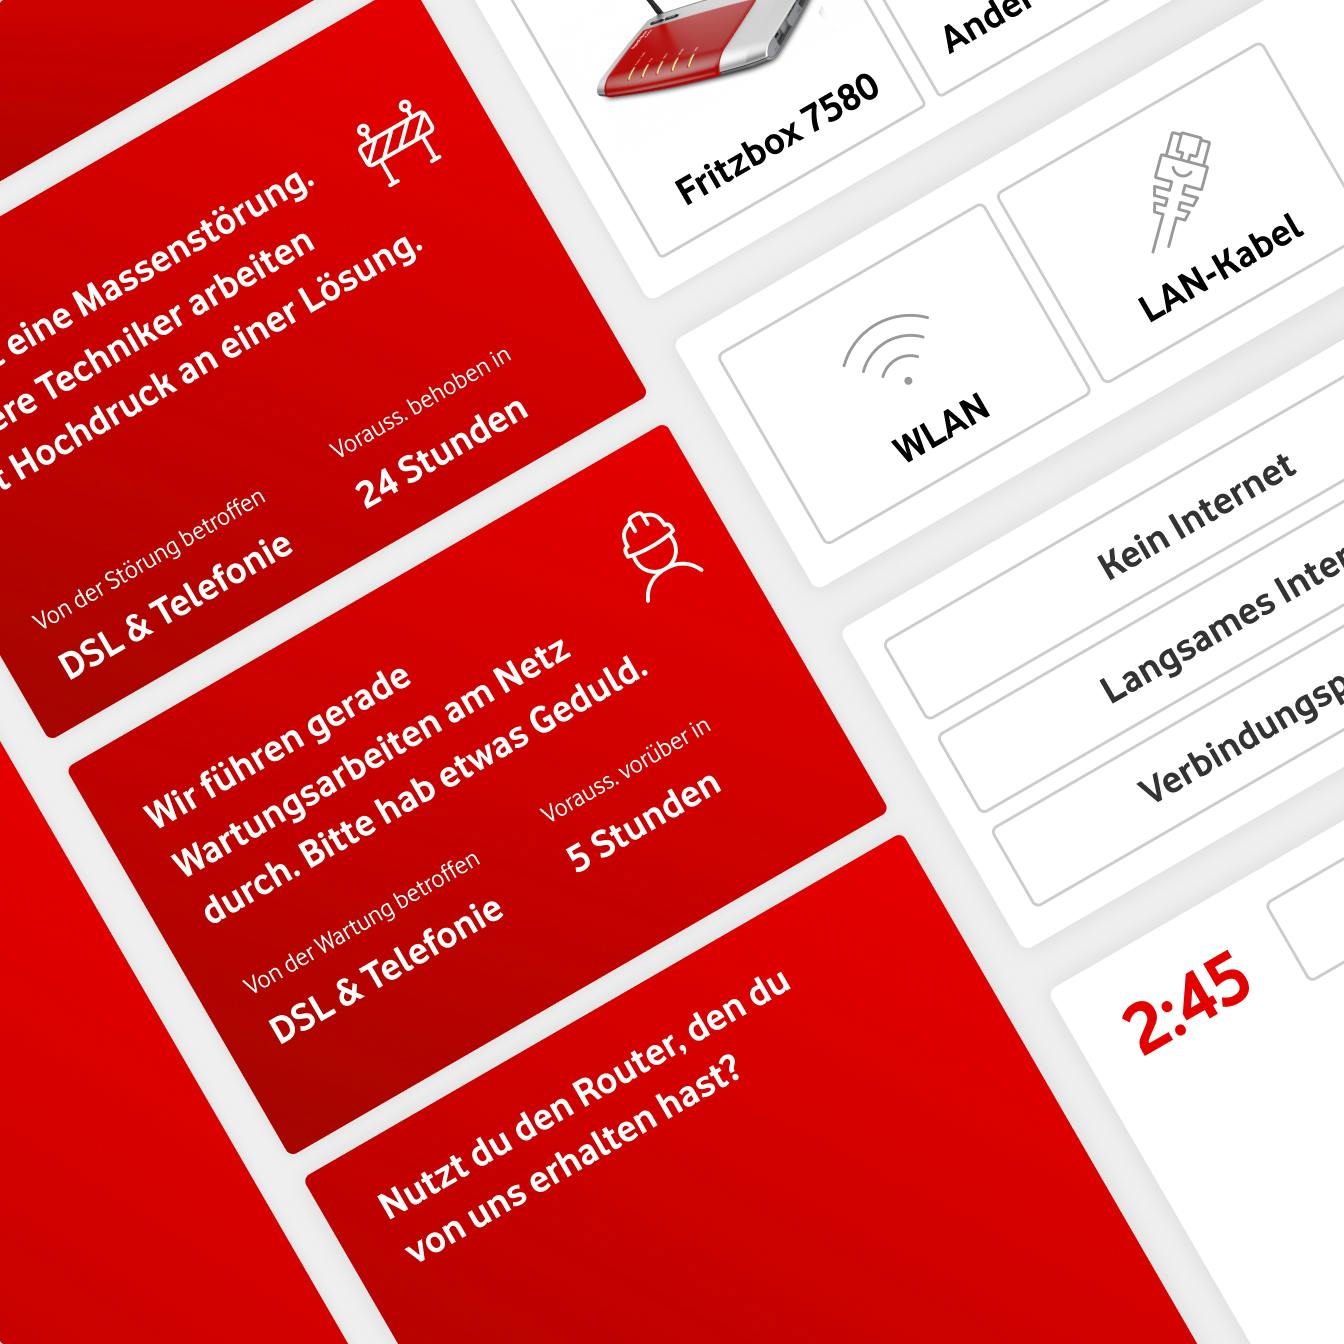 Vodafone website snapshot